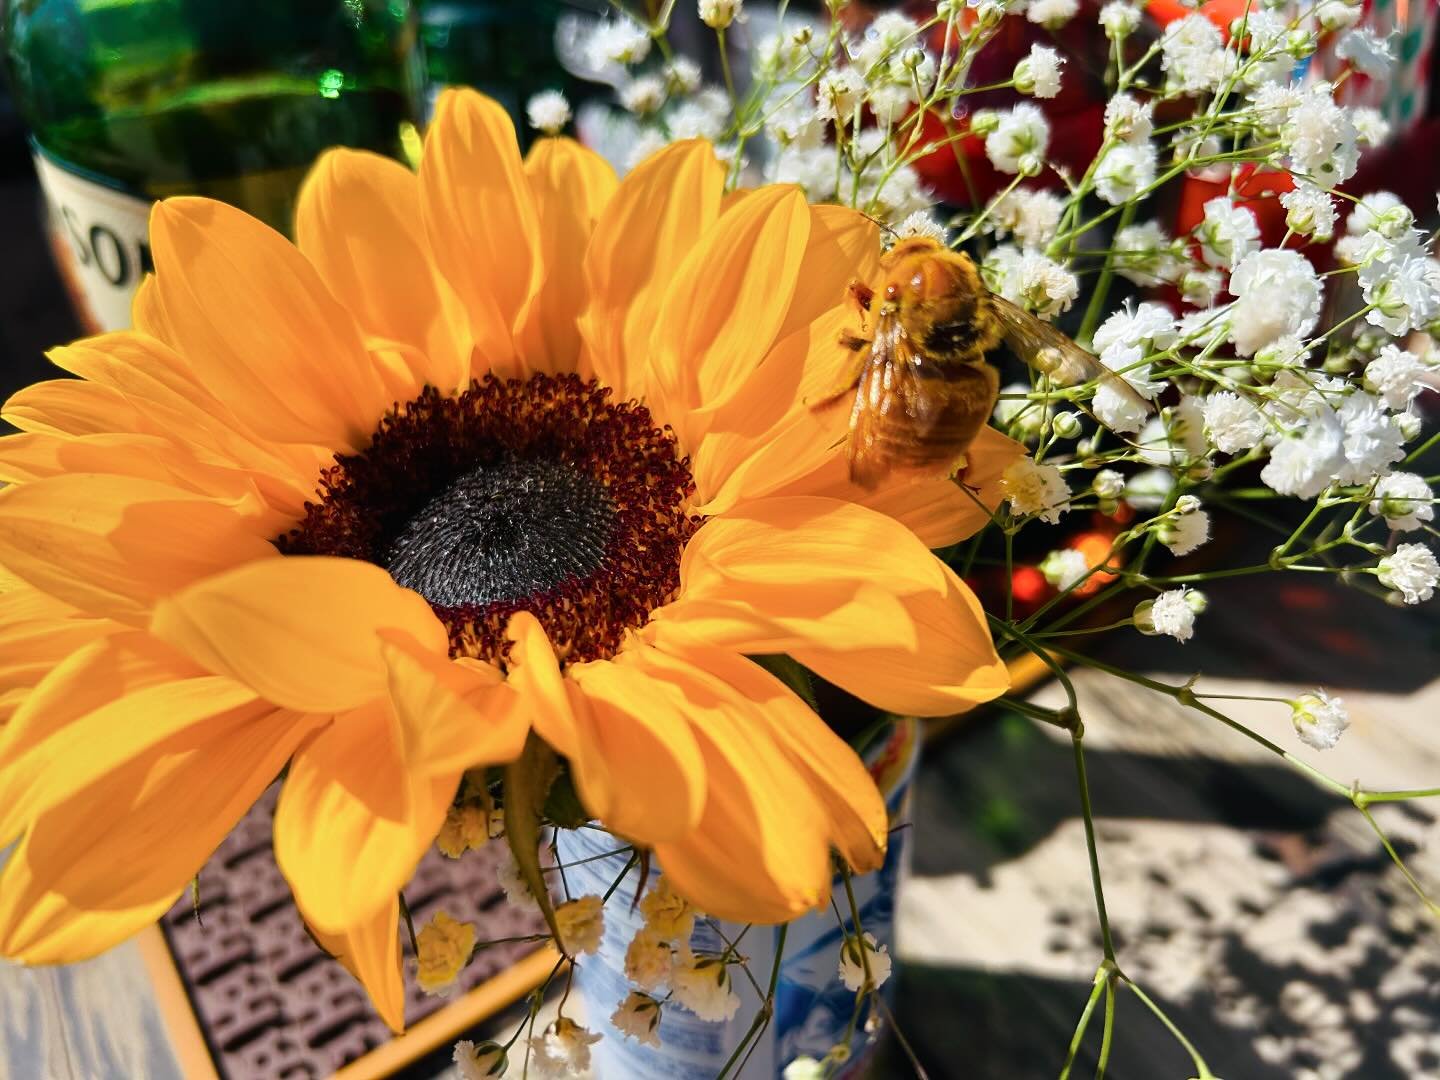 Even the bees love the Market! #farmersmarketatadc #farmersmarketatardovinosdc #freshflowers #bees #sunflowers🌻 #ardovinosdc